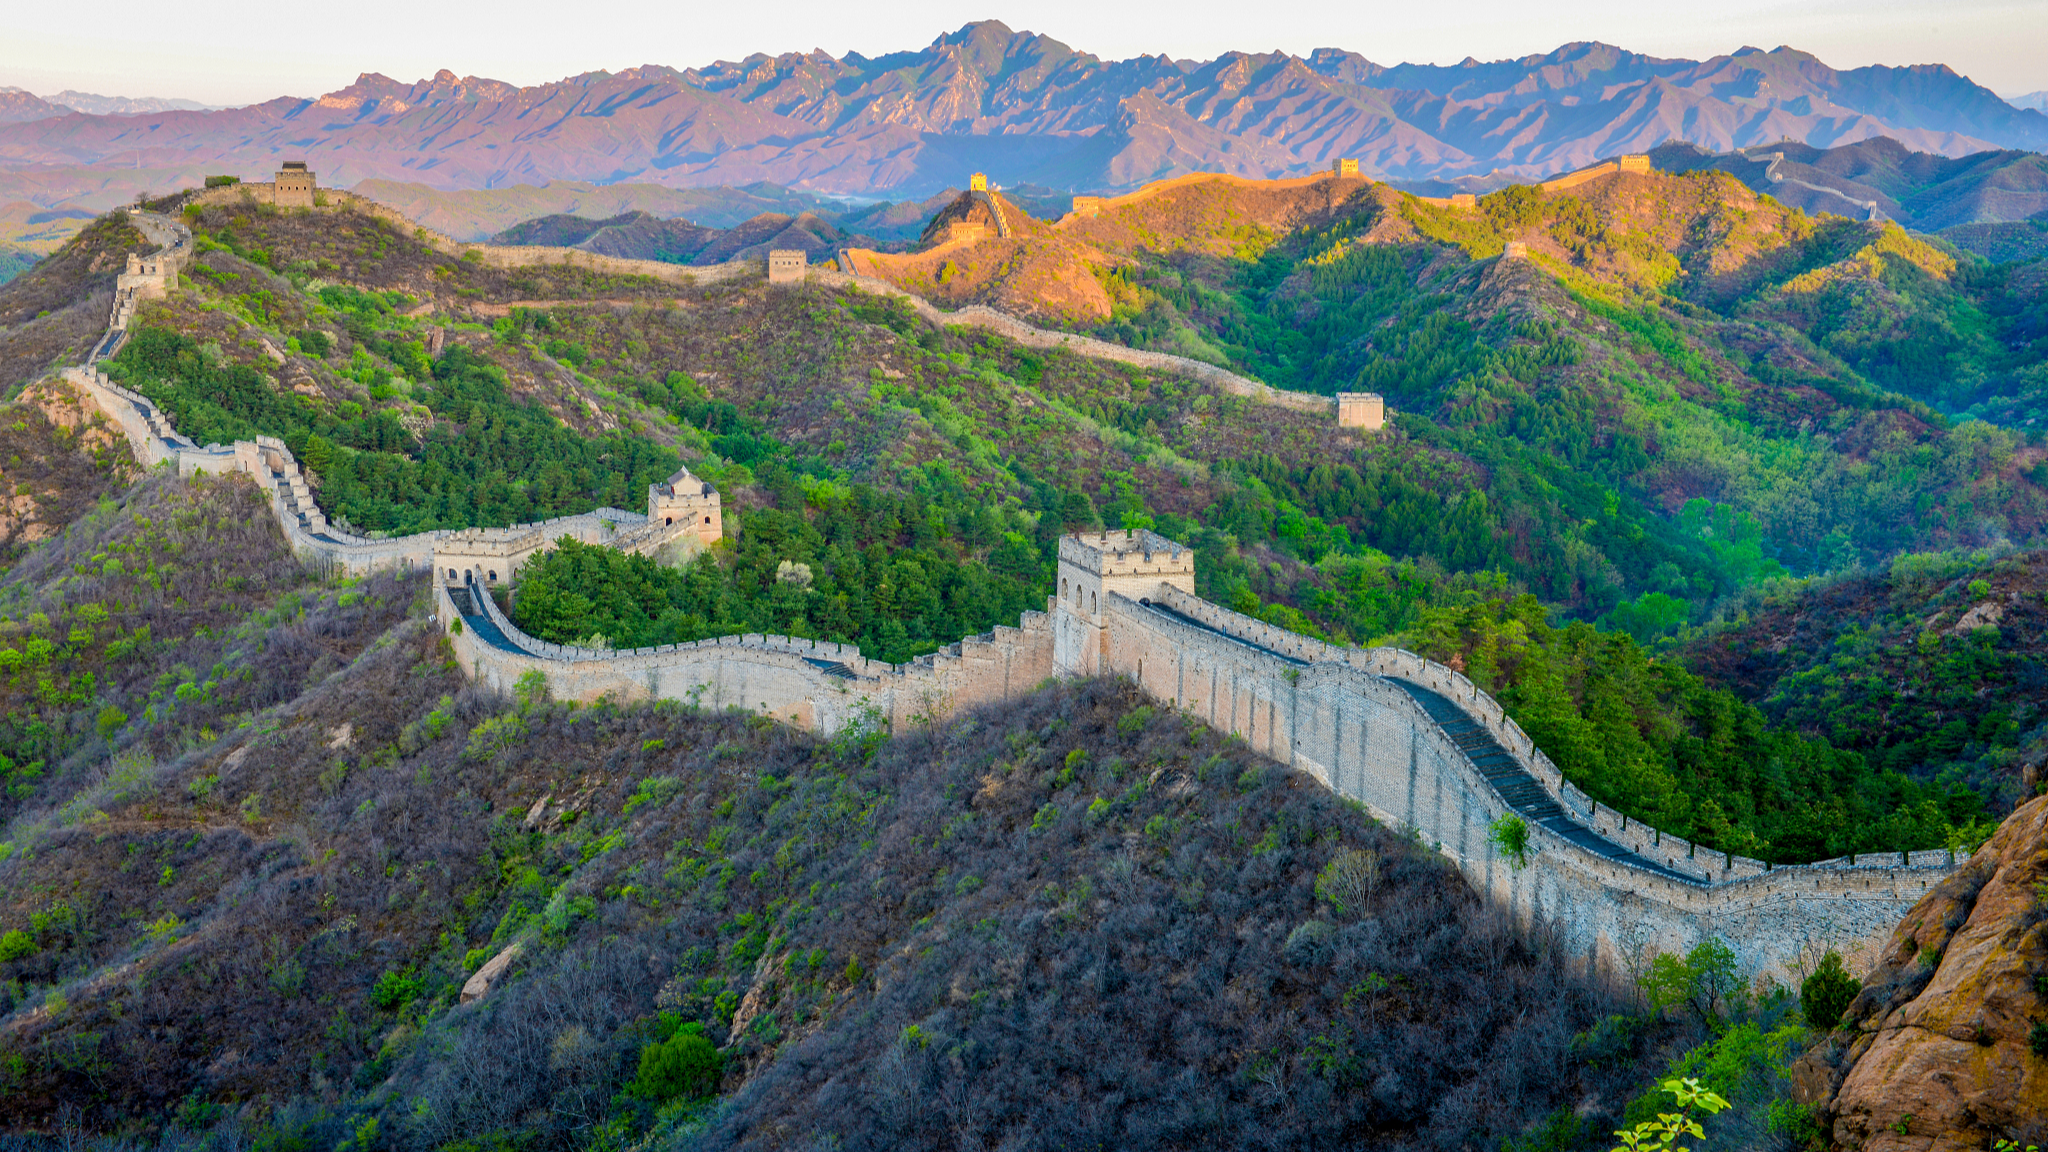 Live: Jinshanling Great Wall reveals its true splendor in summer